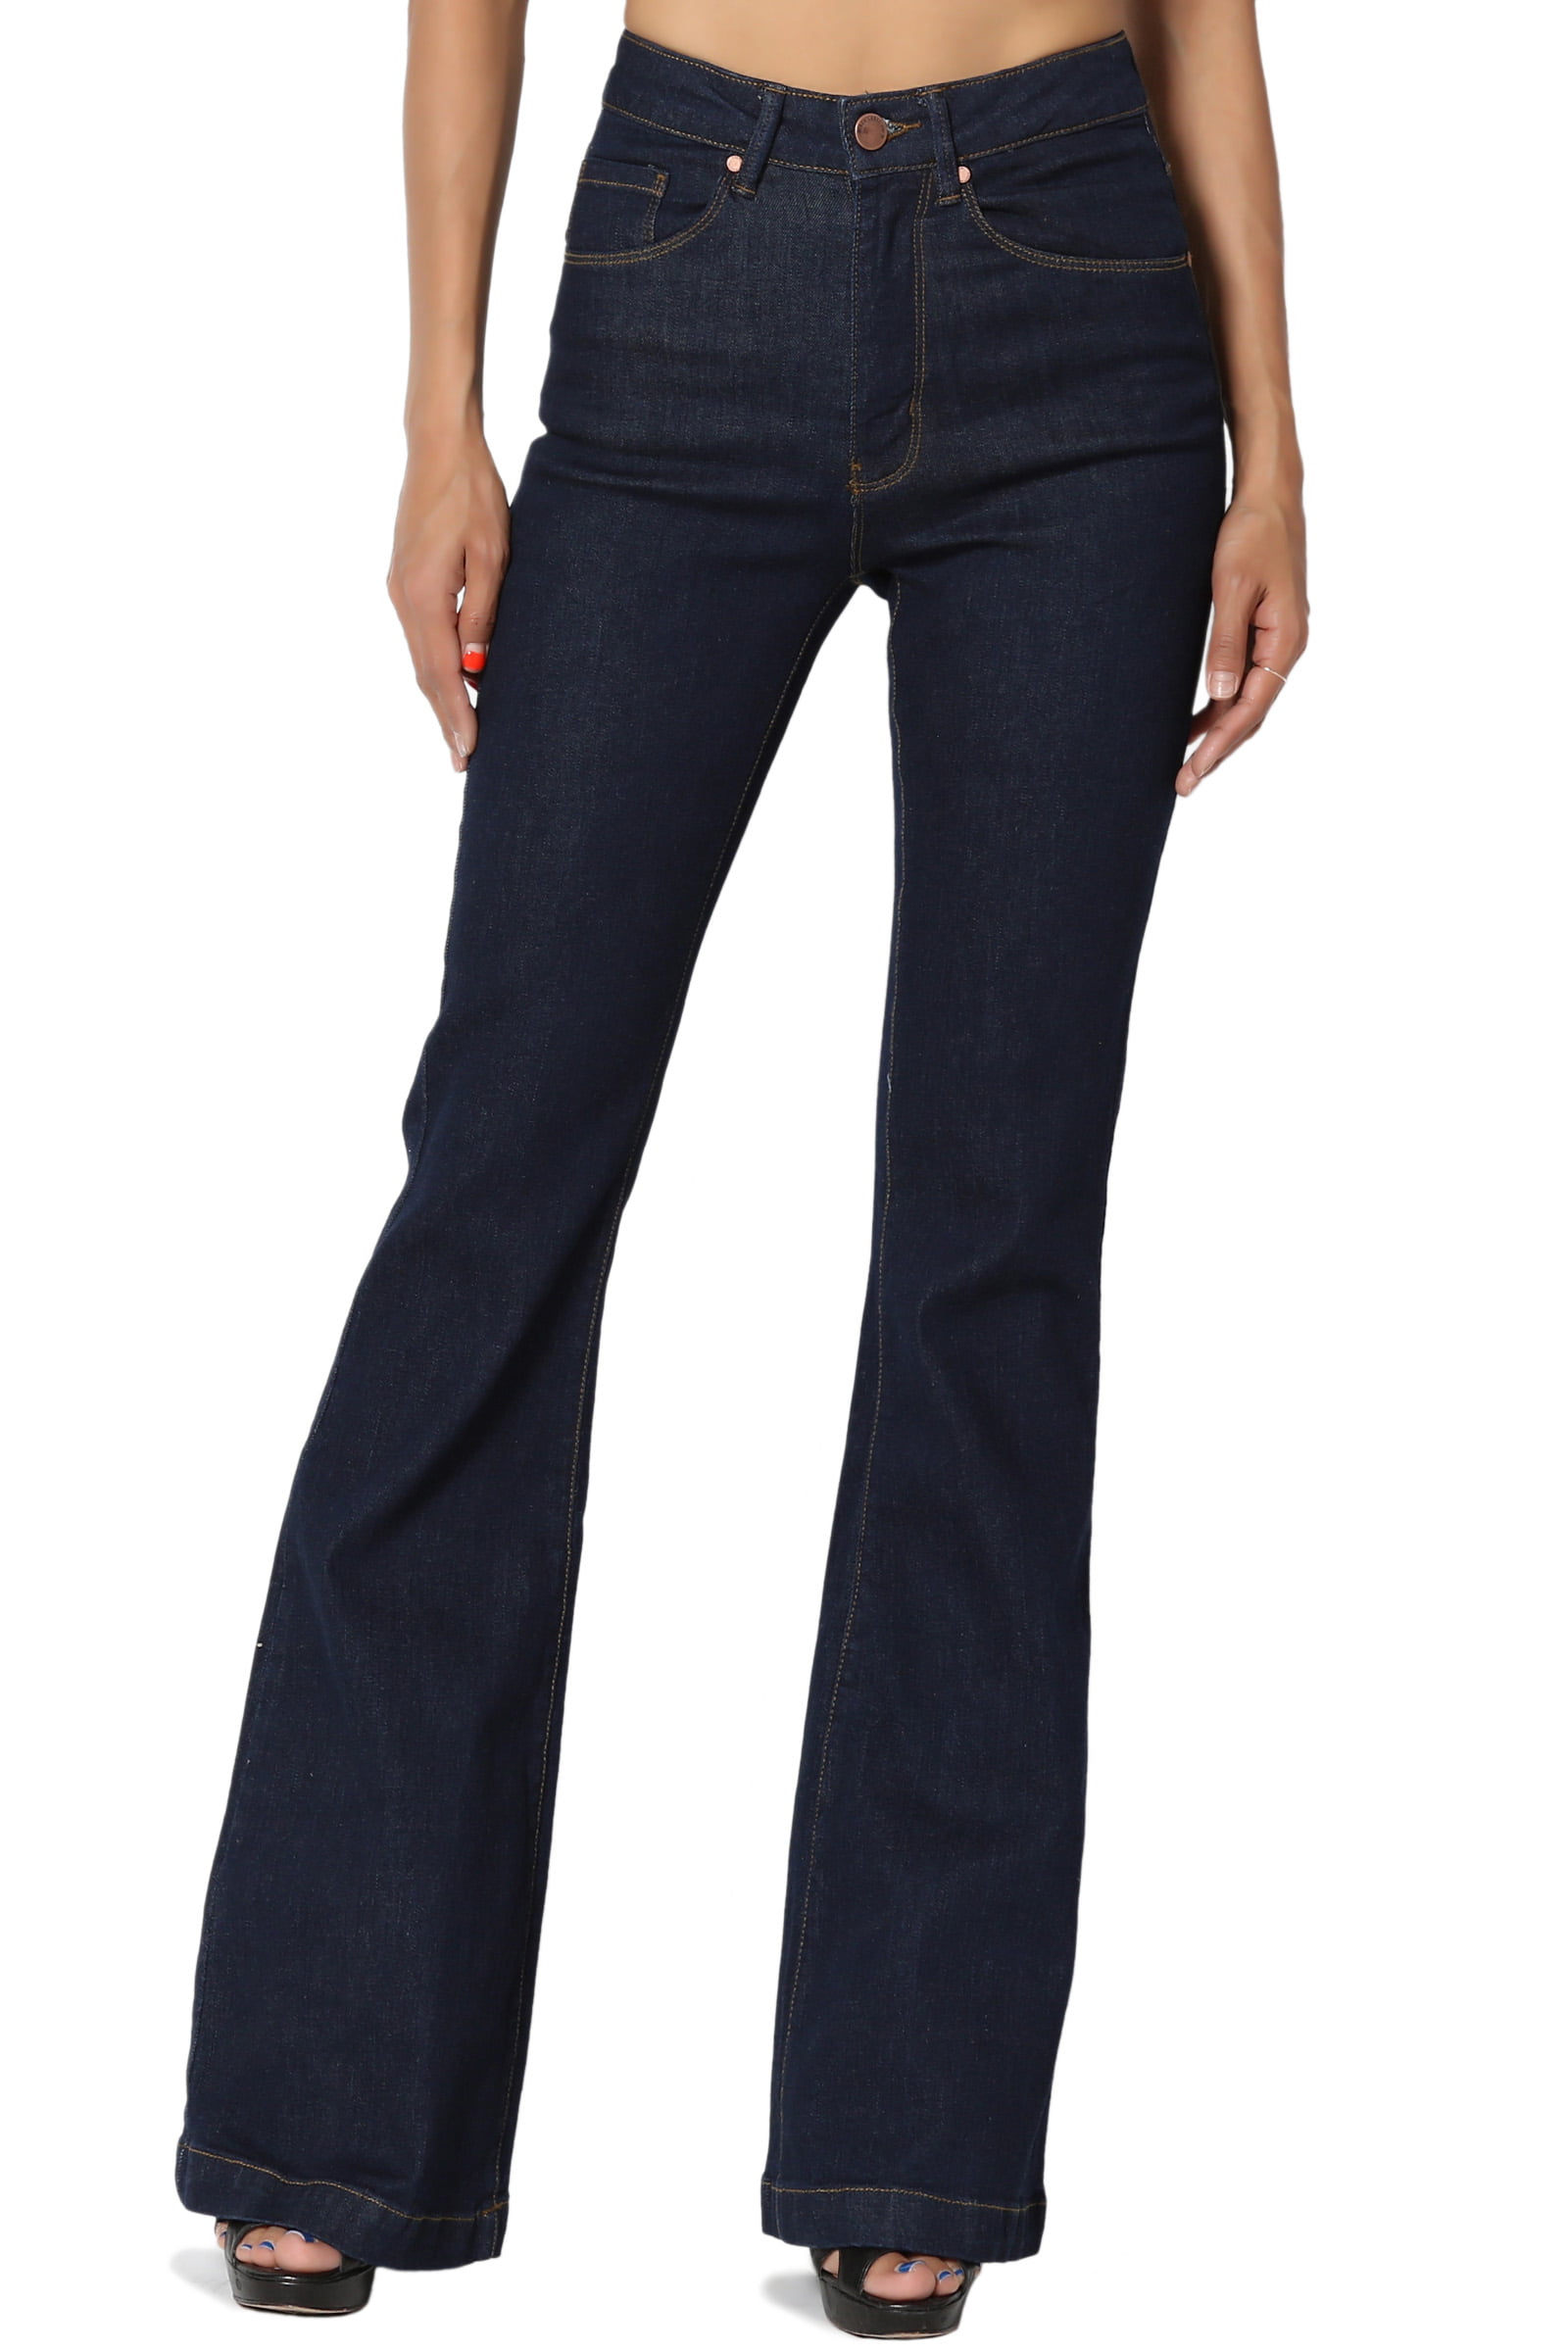 INC New Womens Petite Ripped Regular Fit Flare-Leg Jeans Indigo $79 0P 4P 6P 12P 